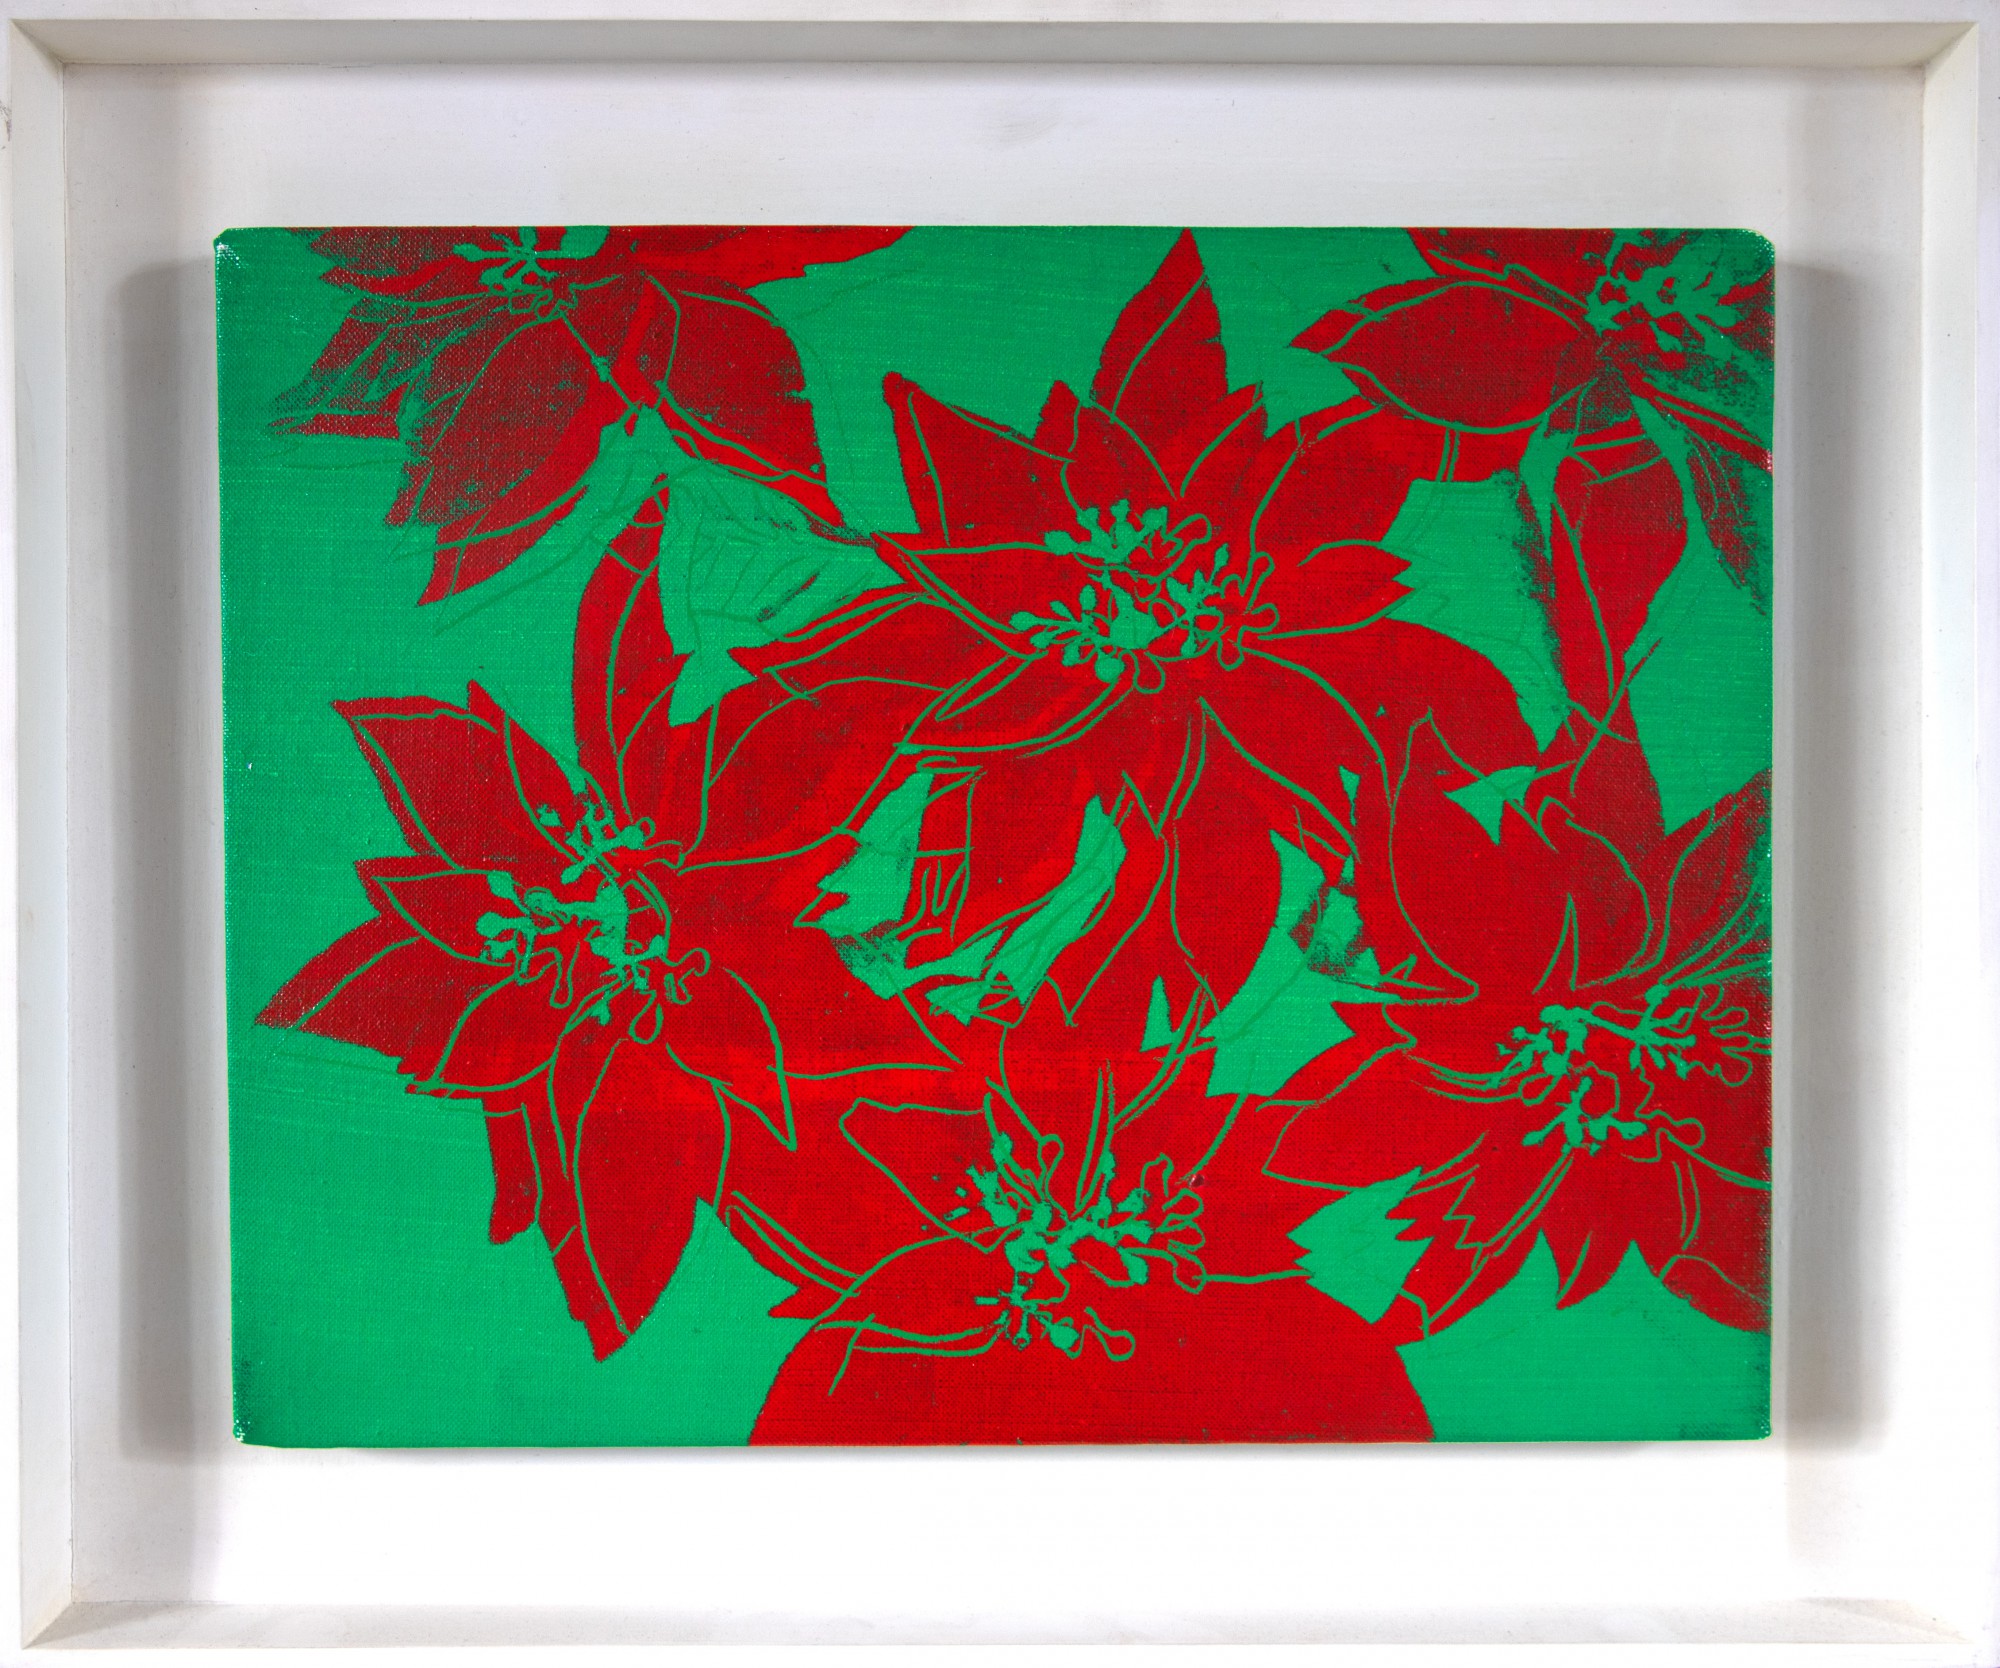 Andy Warhol - Poinsettia